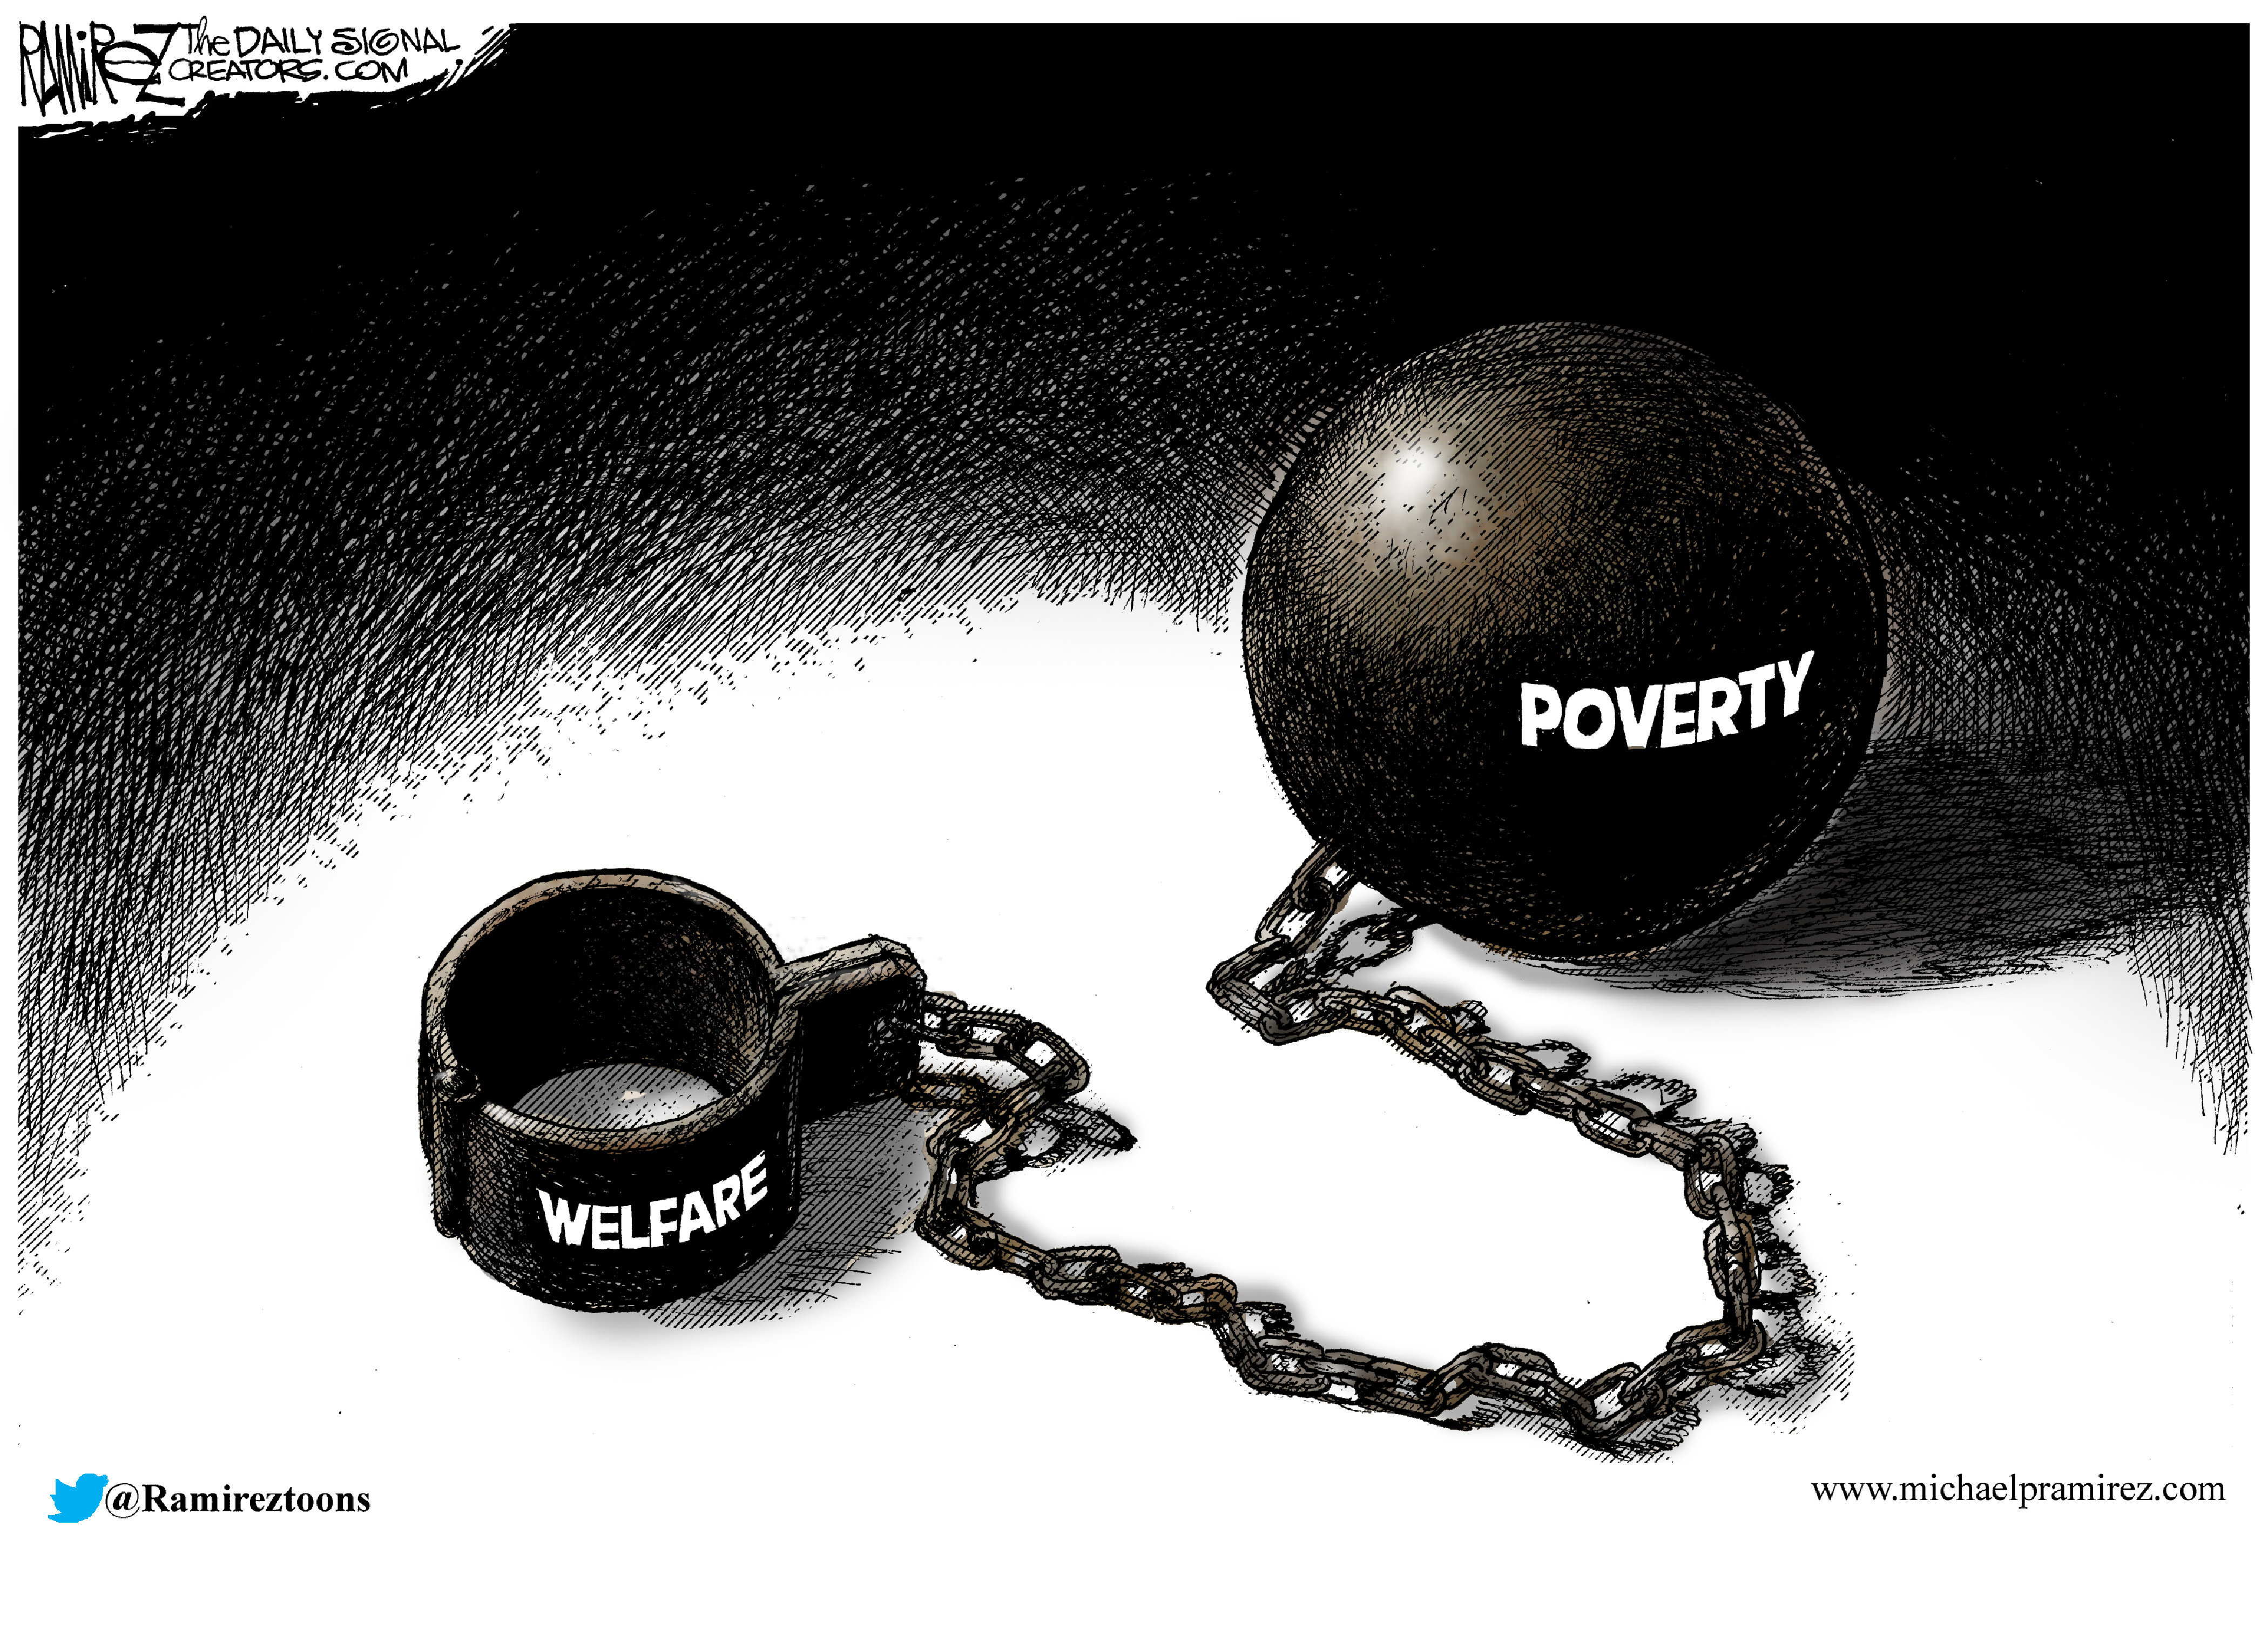 Editorial cartoon . poverty welfare shackles